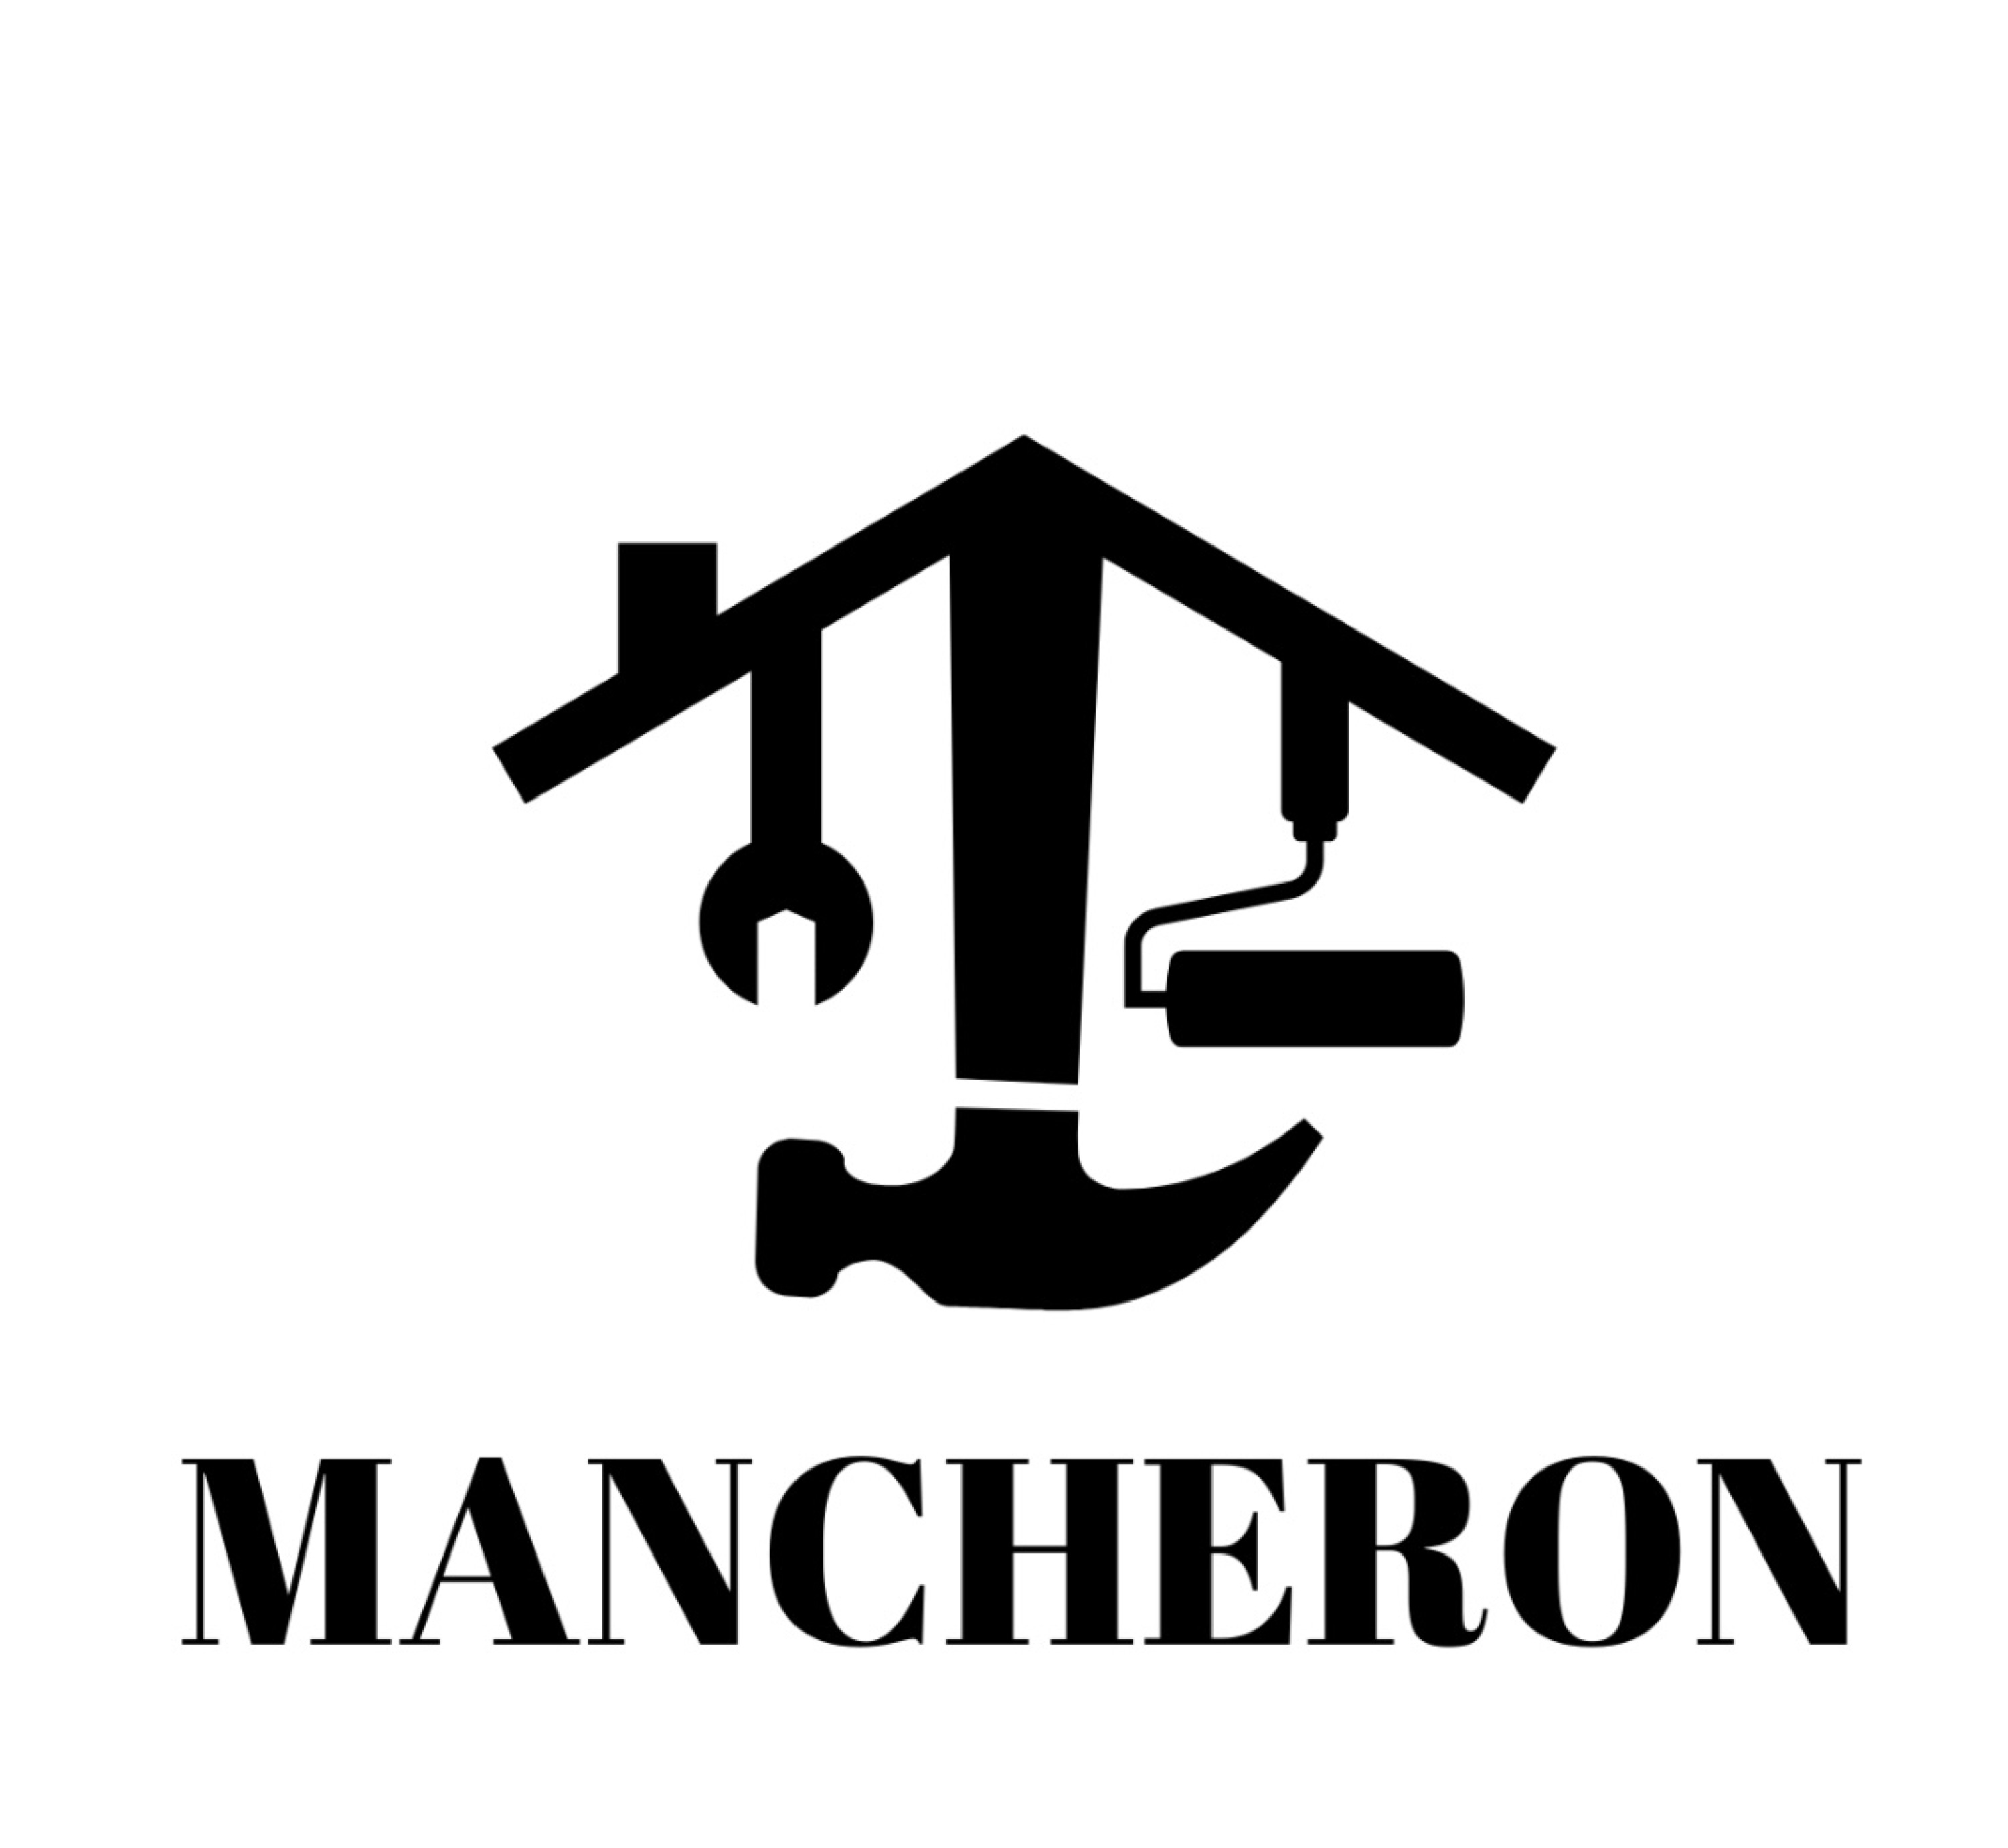 Mancheron Maintenance Logo